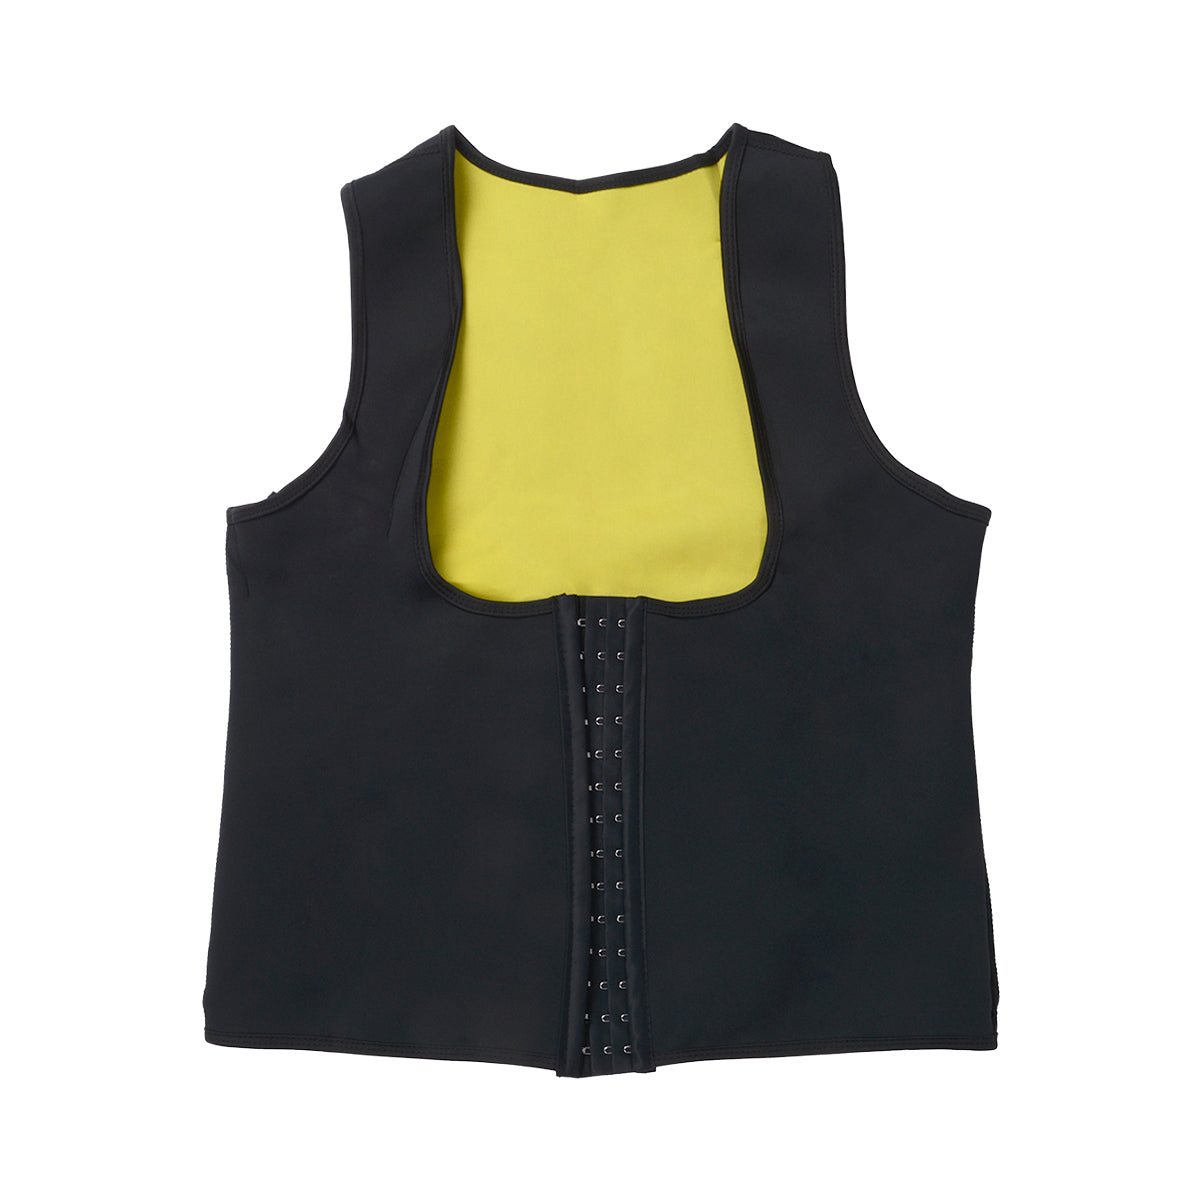 Corset sweat gym fitness vest waist trainer Exercise workout corset